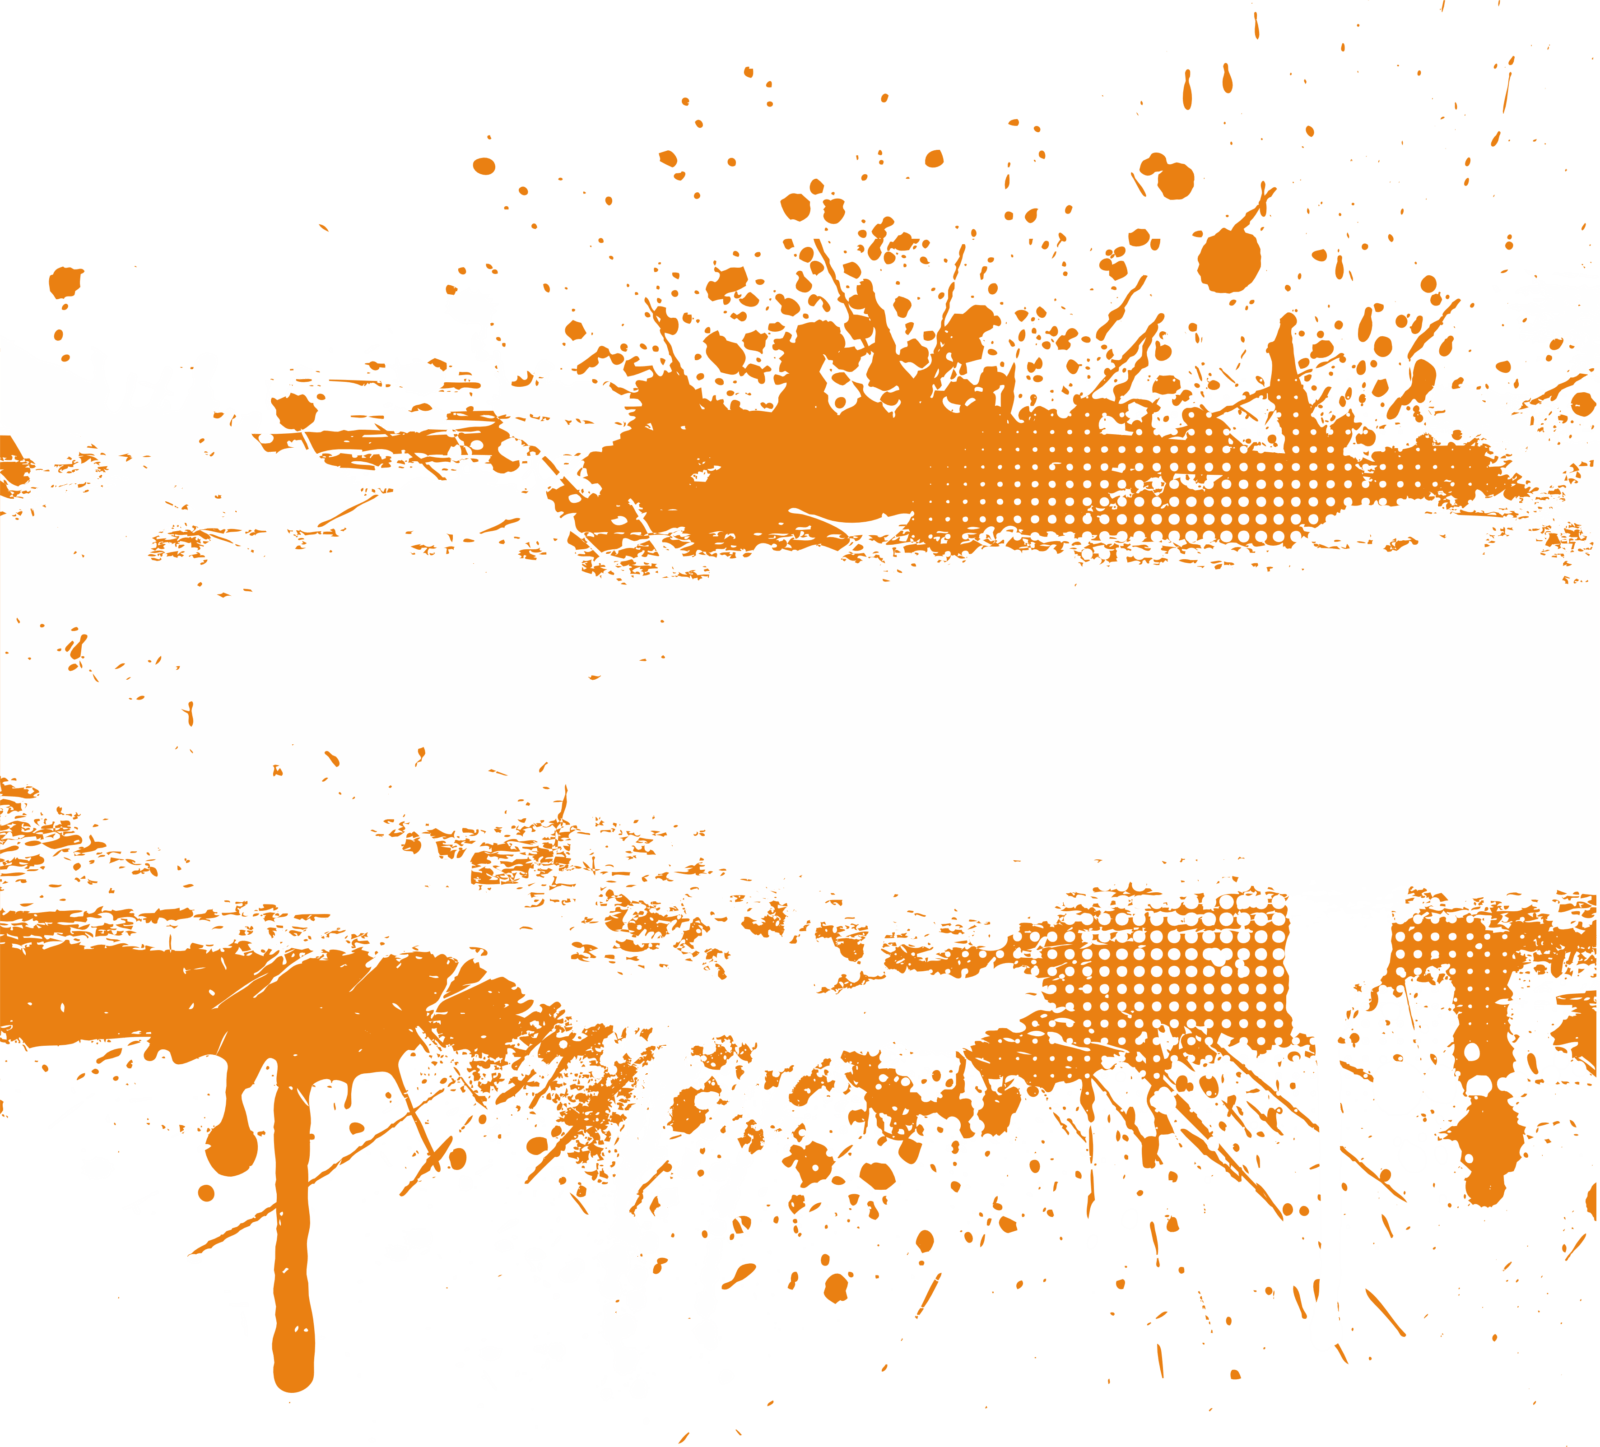 Splattered grunge background orange and white